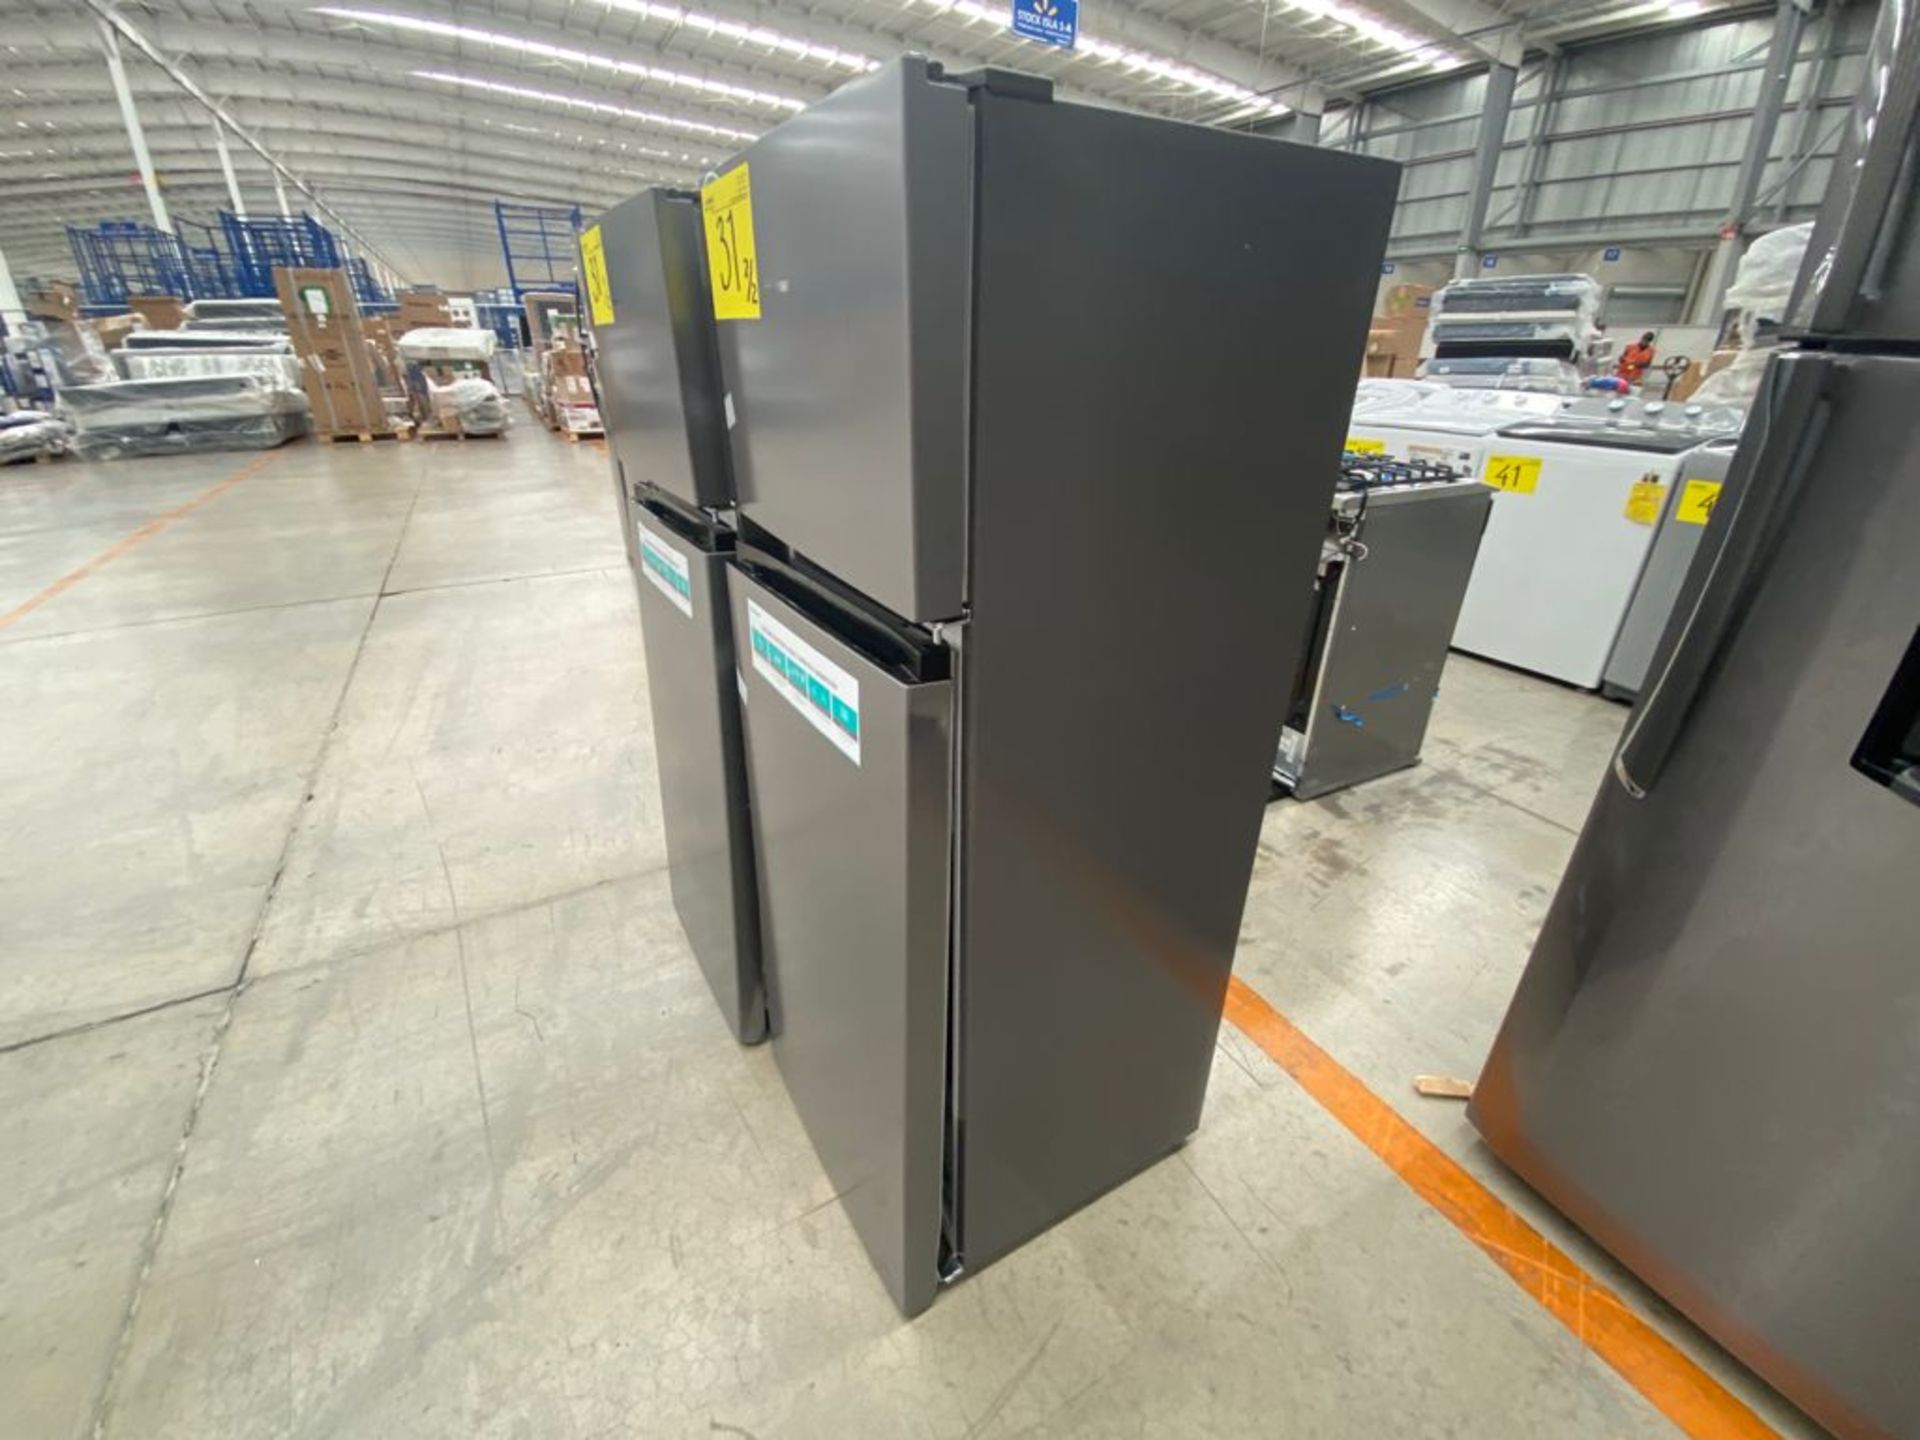 2 Refrigeradores marca Hisense color gris modelo RT80D6AWX - Image 5 of 28